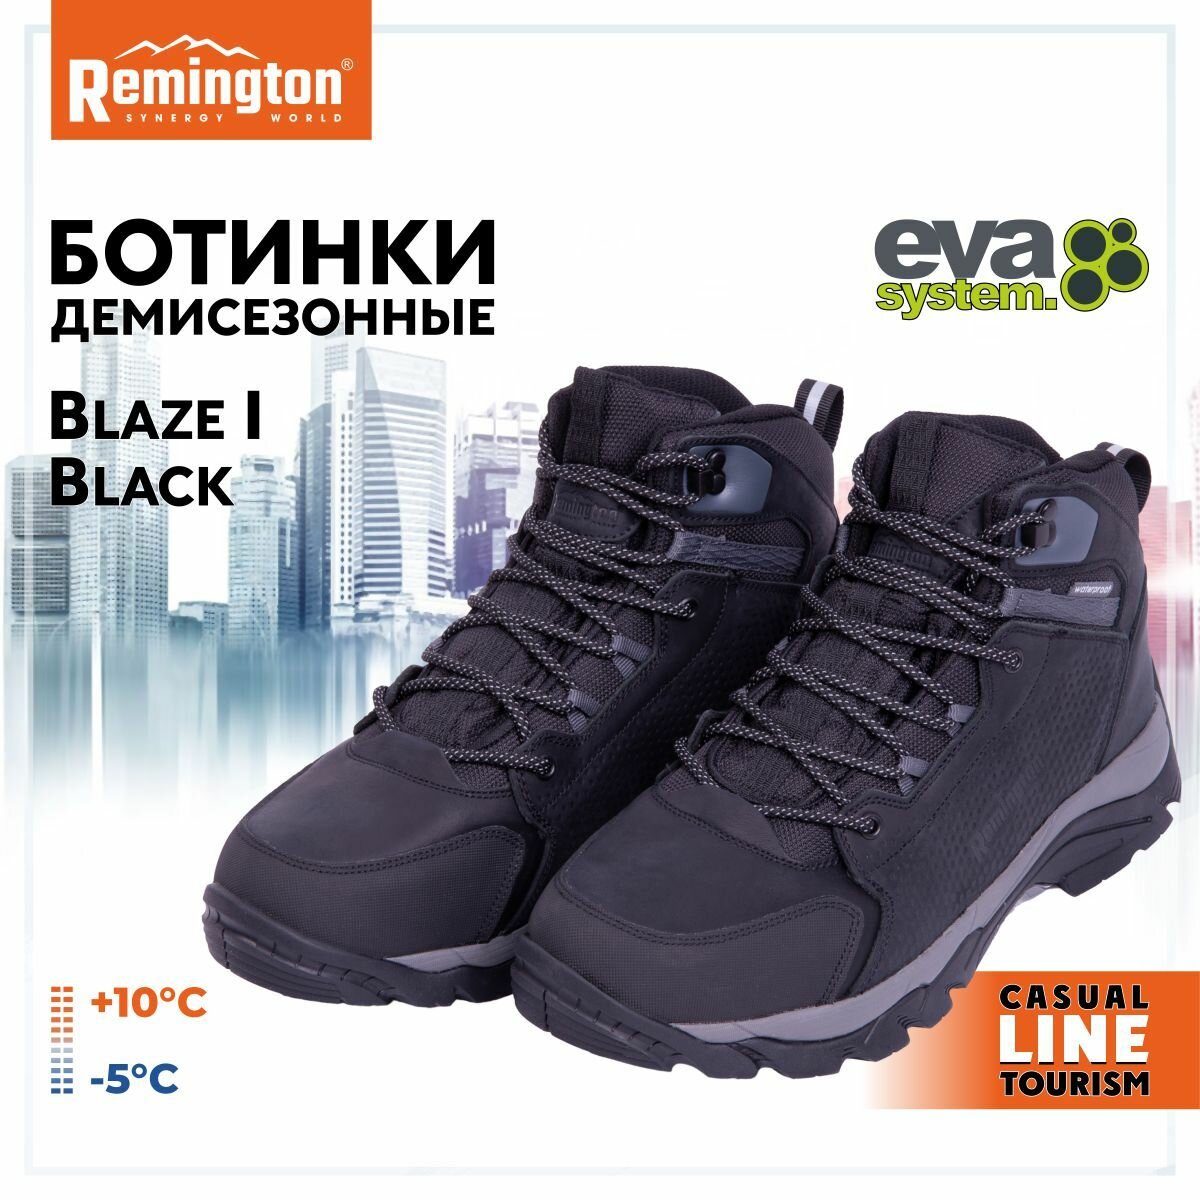 Ботинки мужские Remington Blaze I Black р. 45 UB1007-010